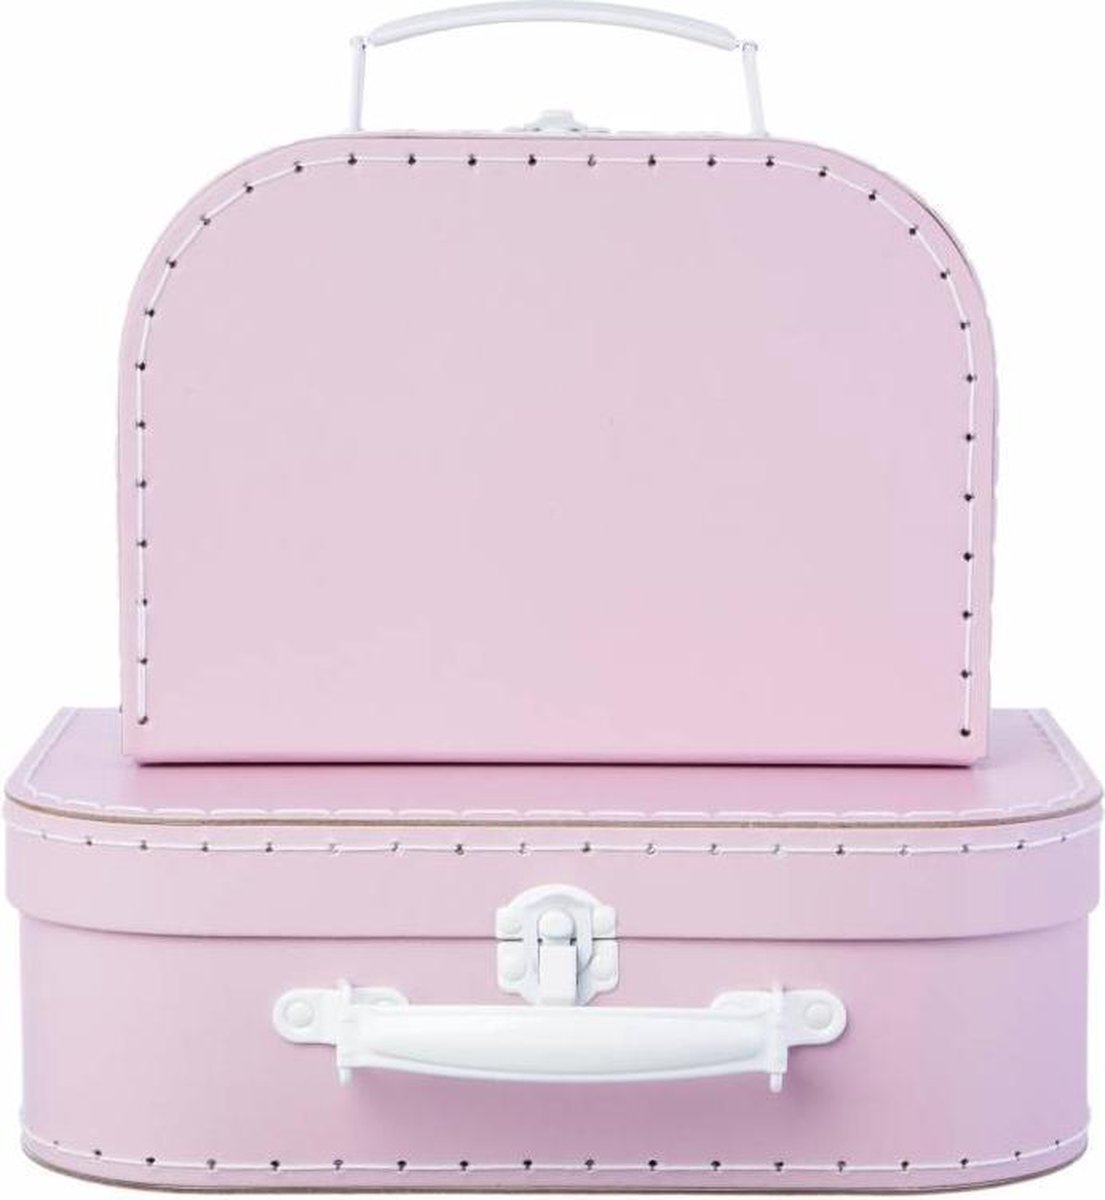 Kofferset / Set van 2 koffertjes Pastel Roze | bol.com